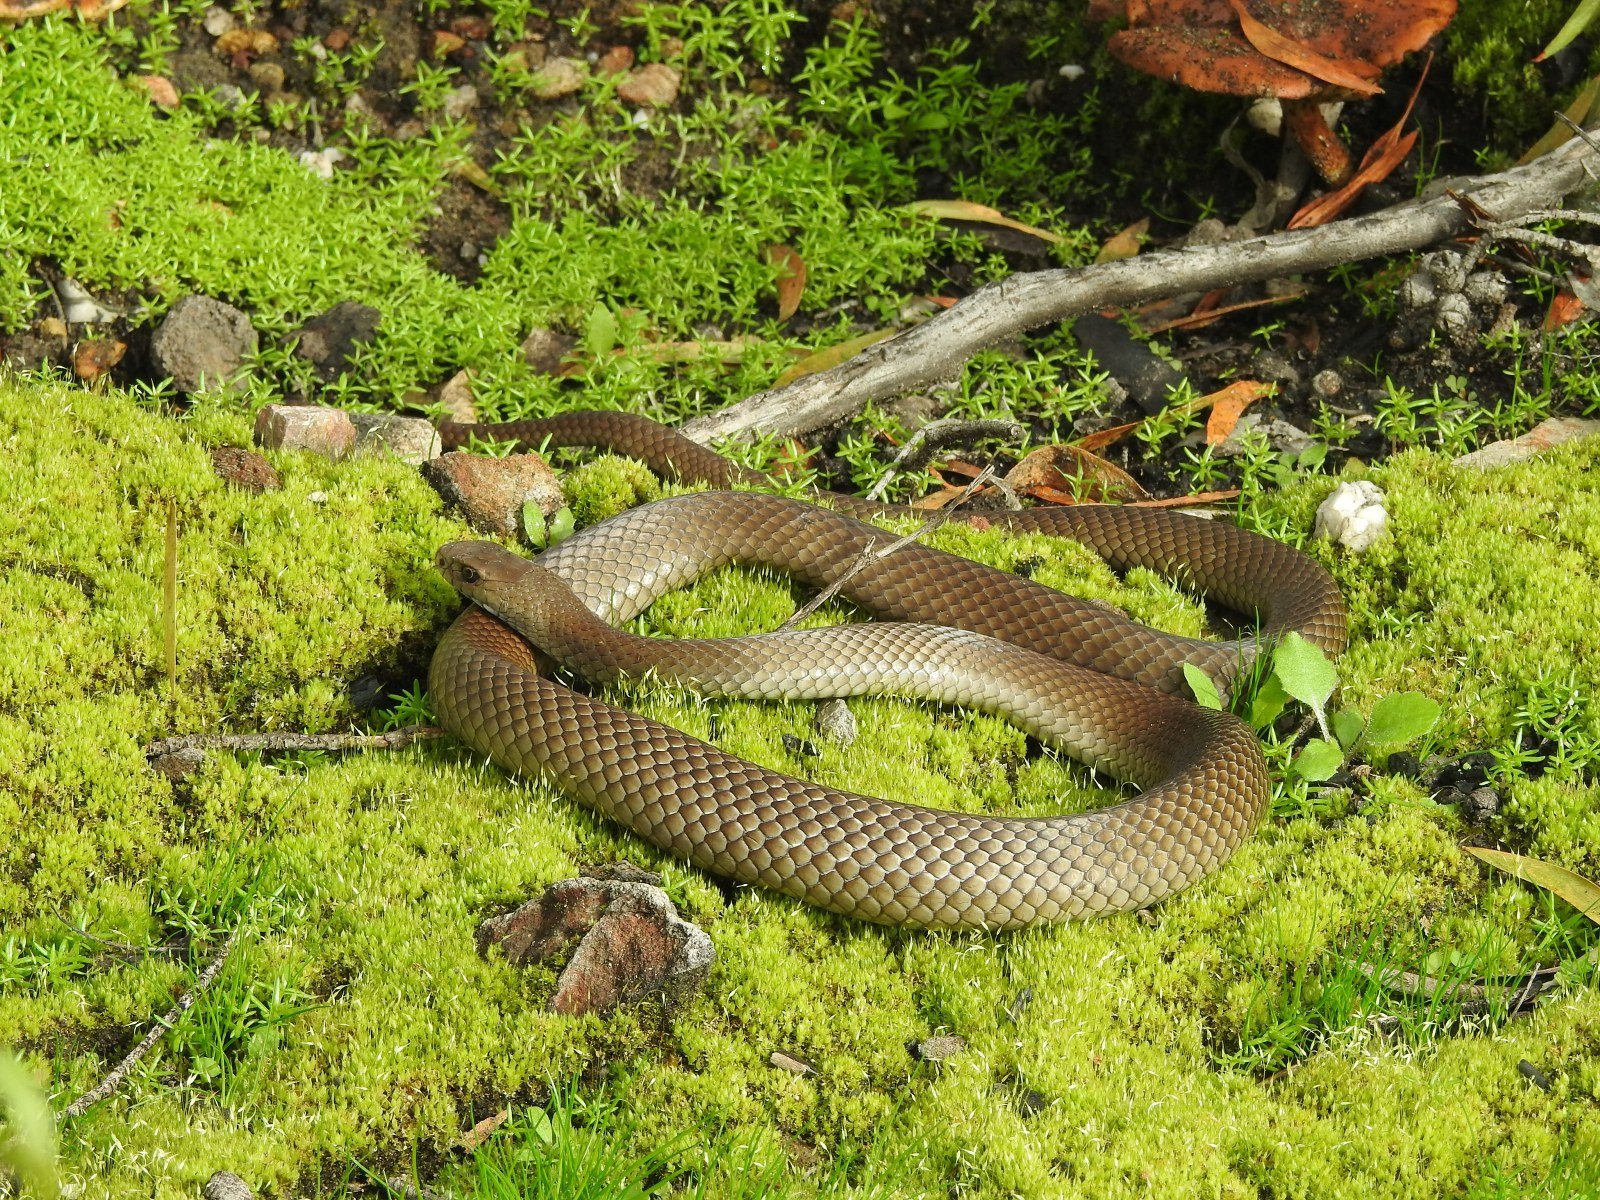 eastern brown snake, Pseudonaja textilis, reptiles of the Adelaide Hills